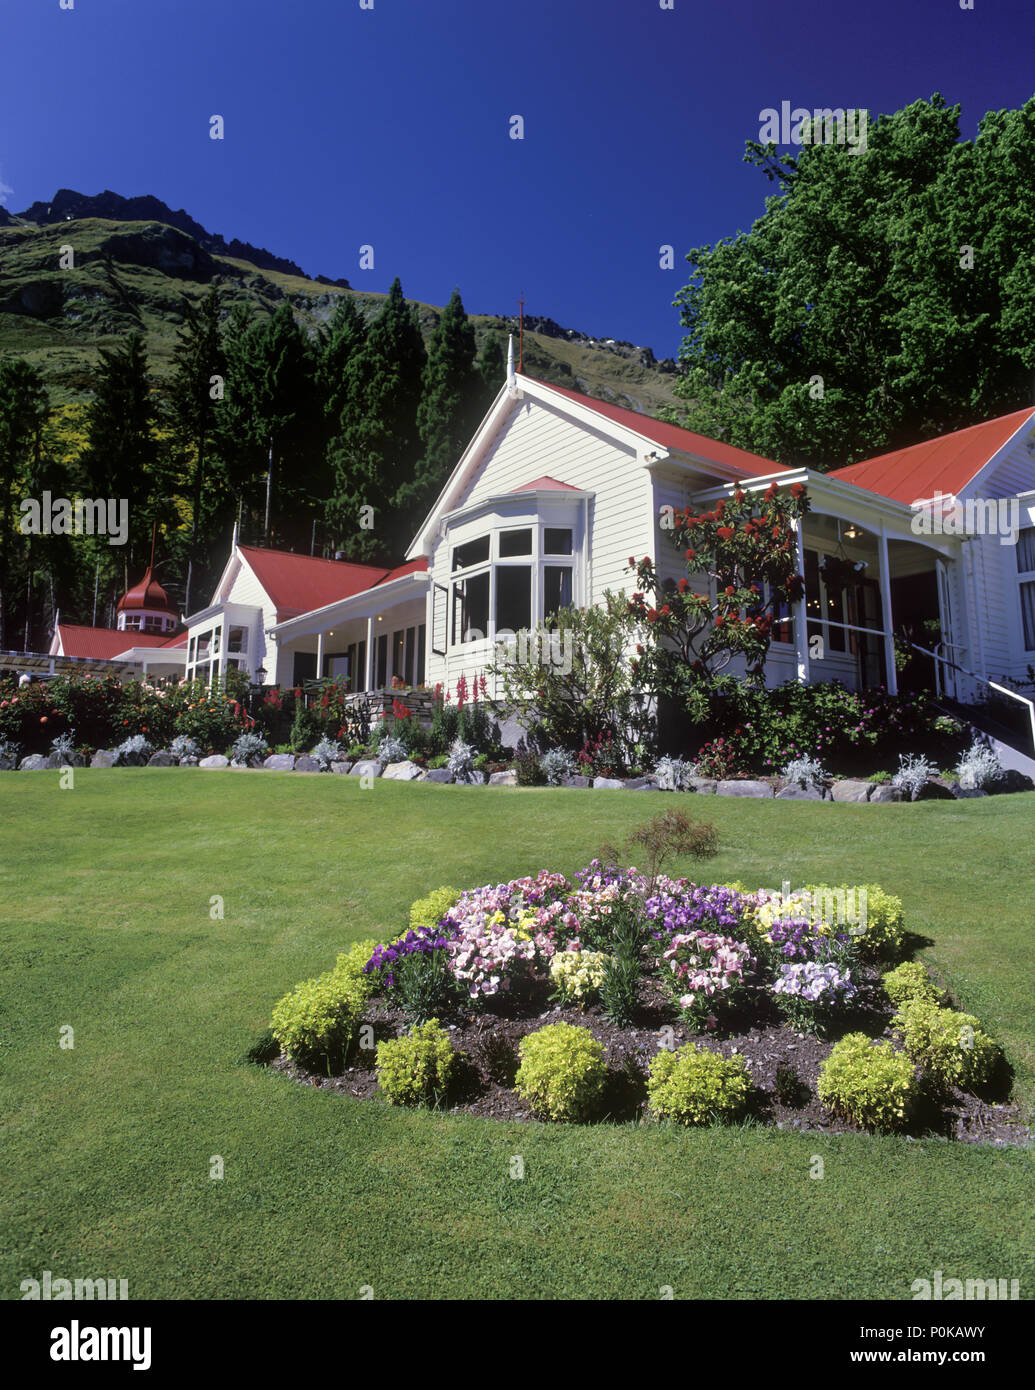 1995 WALTER PEAK HIGH COUNTRY HISTORIQUE Gare Lac Wakatipu ile sud Nouvelle Zelande Banque D'Images